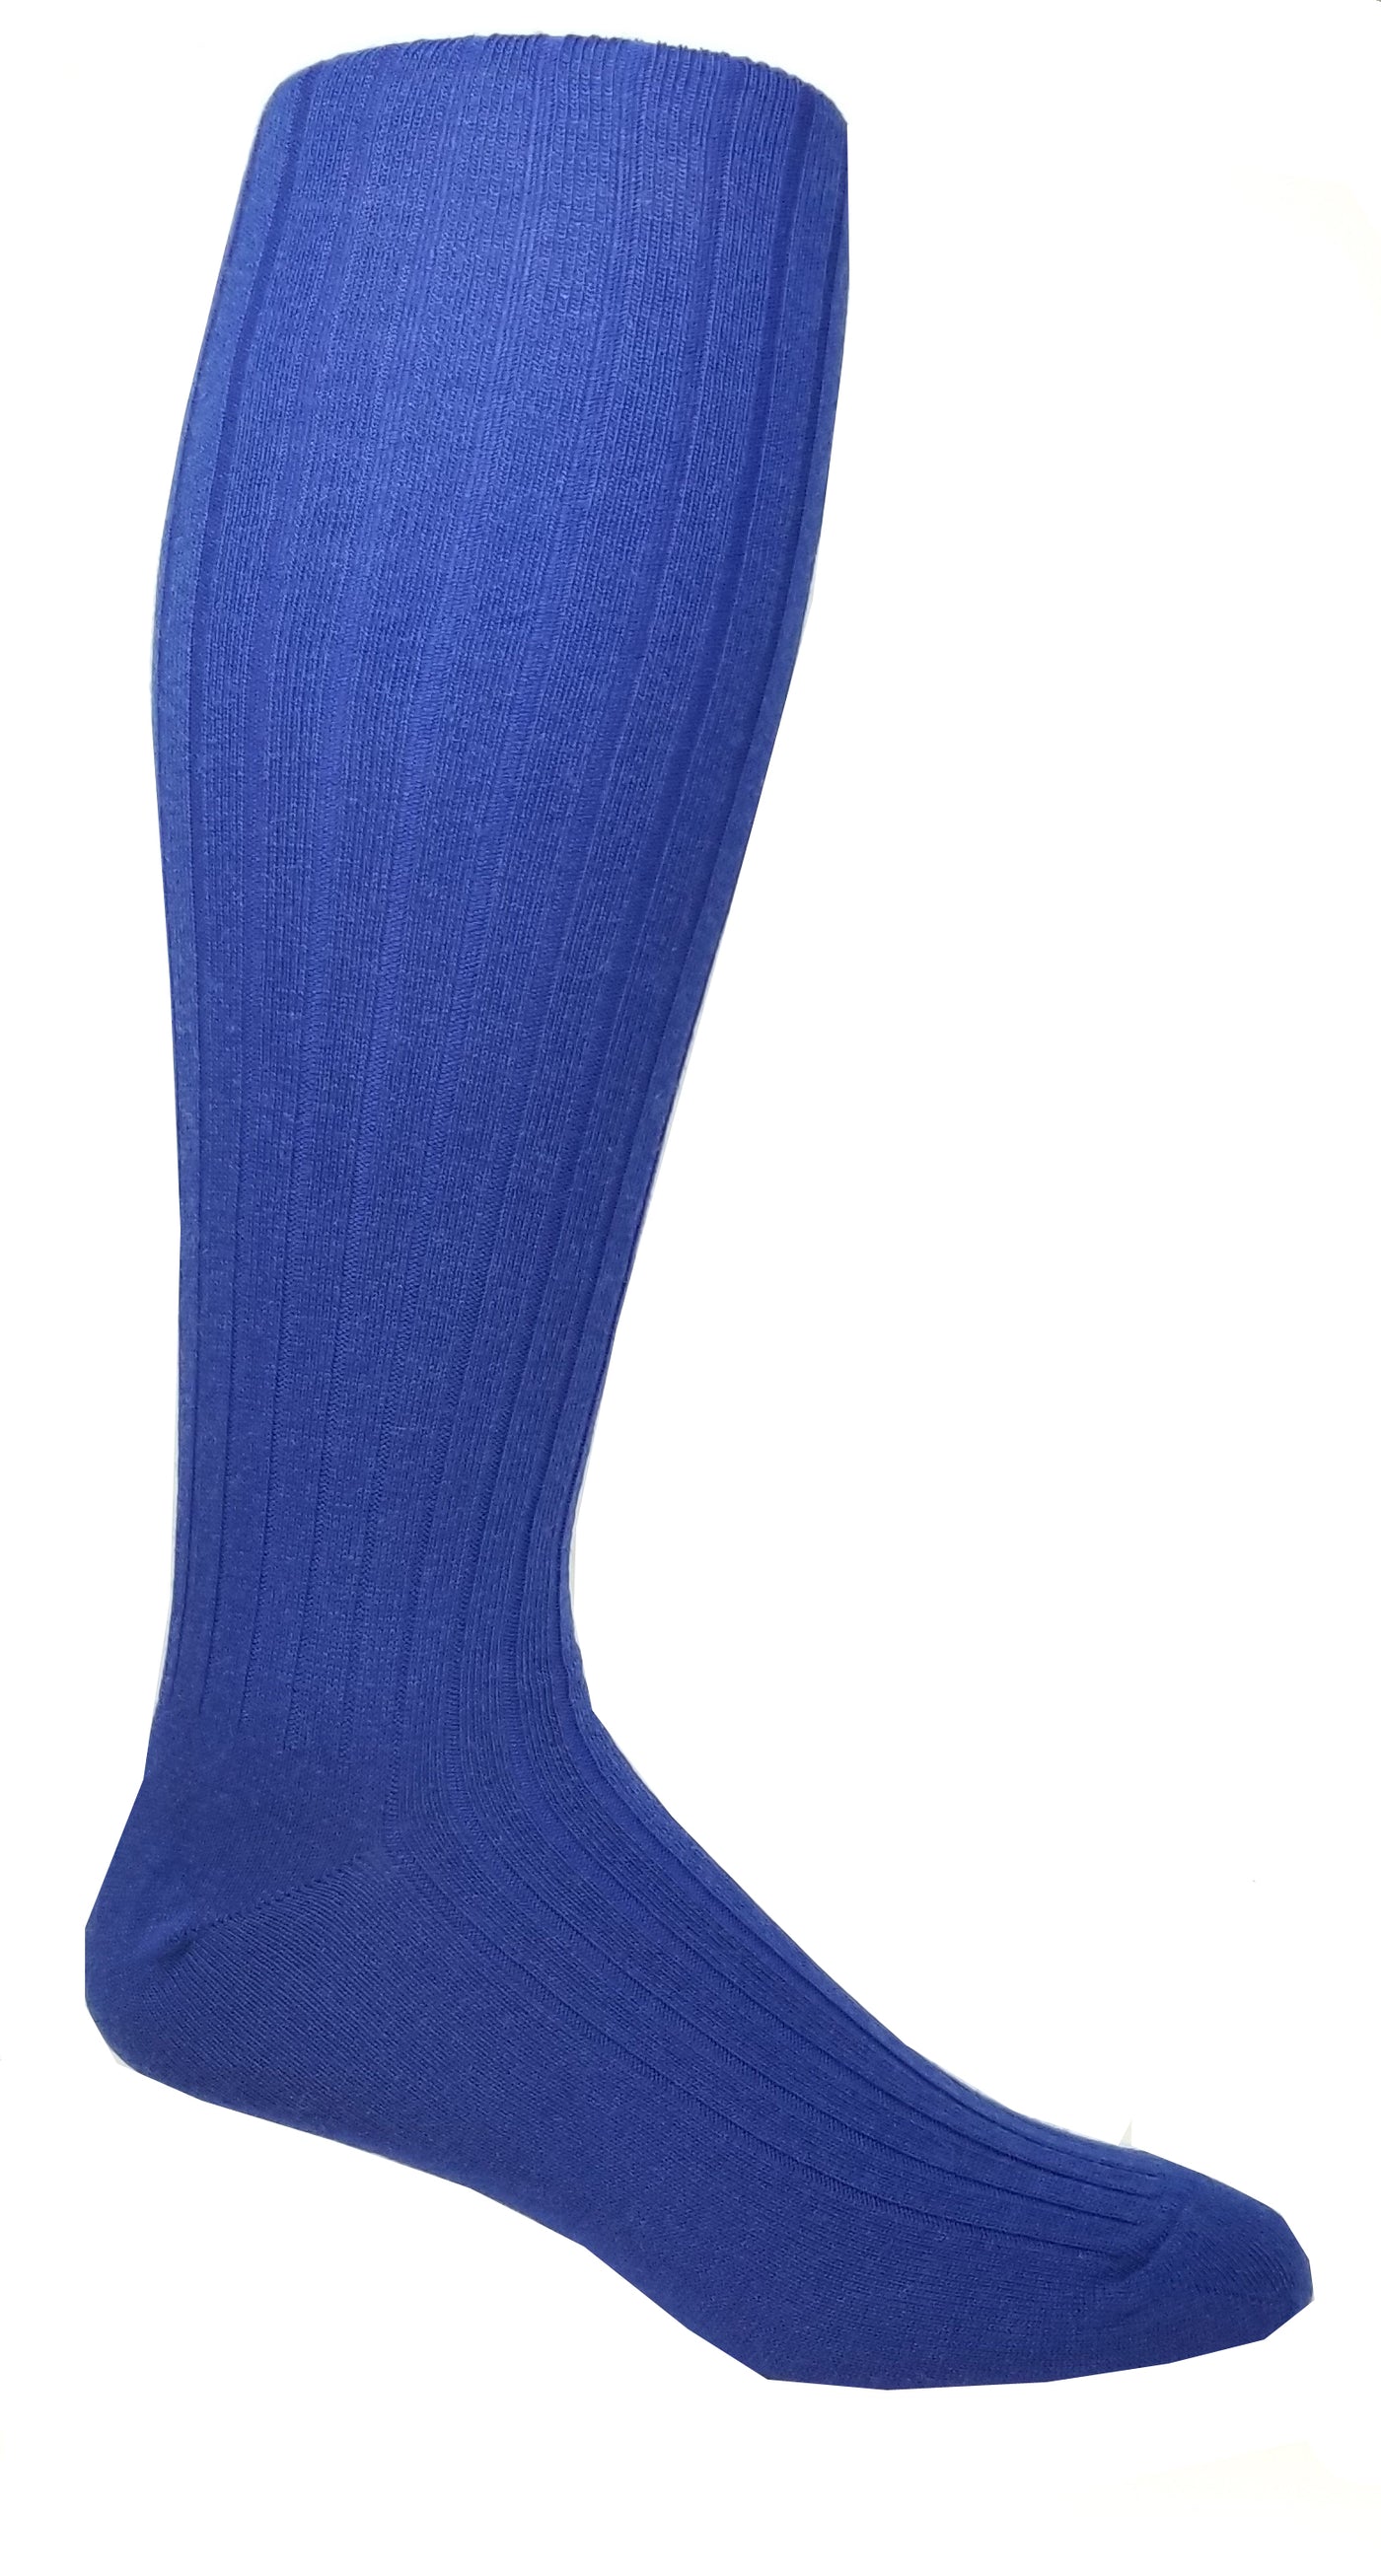 Vagden Men's Bermuda Knee-High Socks with Mercerized Cotton (3 PAIRS)